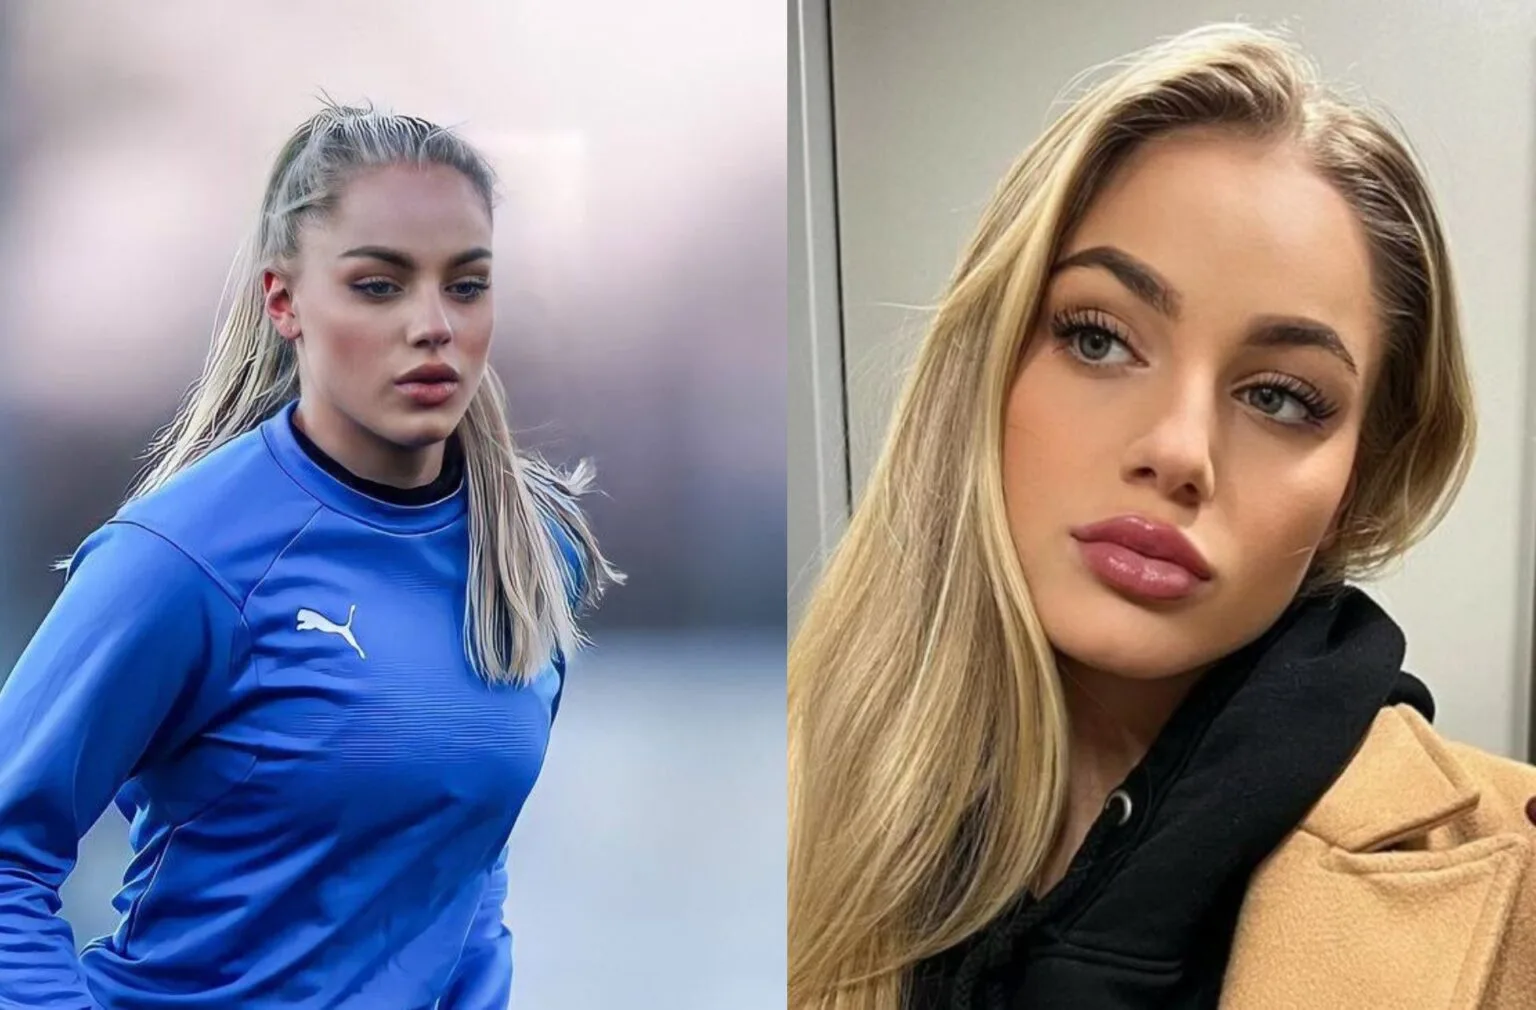 Meet Ana Maria Marković, the world's most beautiful soccer player